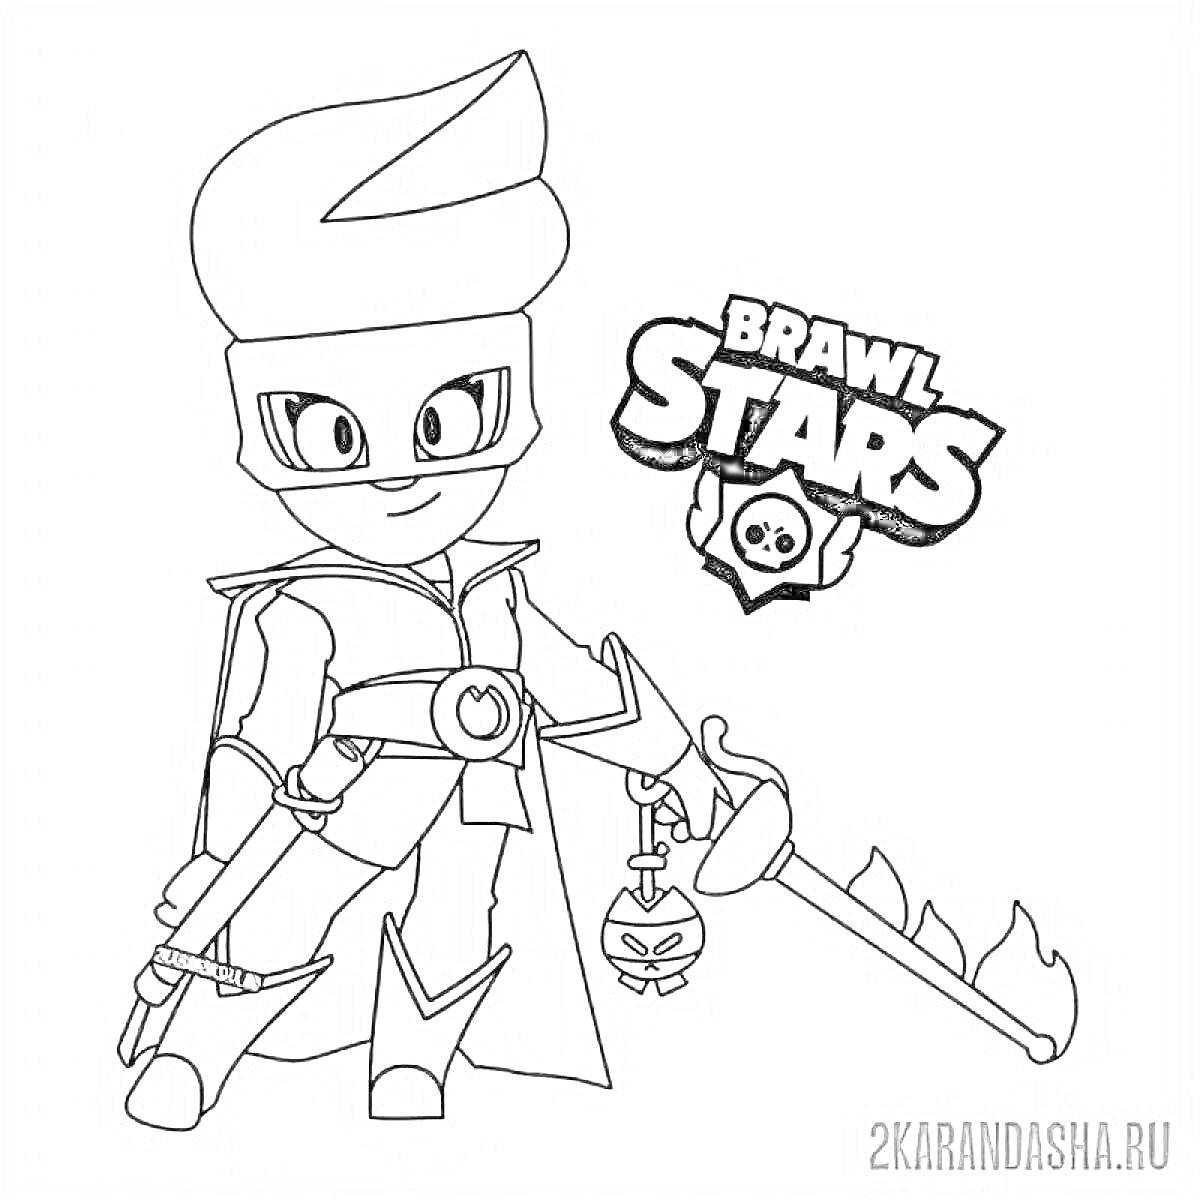 Раскраска Персонаж Амбер из Brawl Stars с огненным оружием